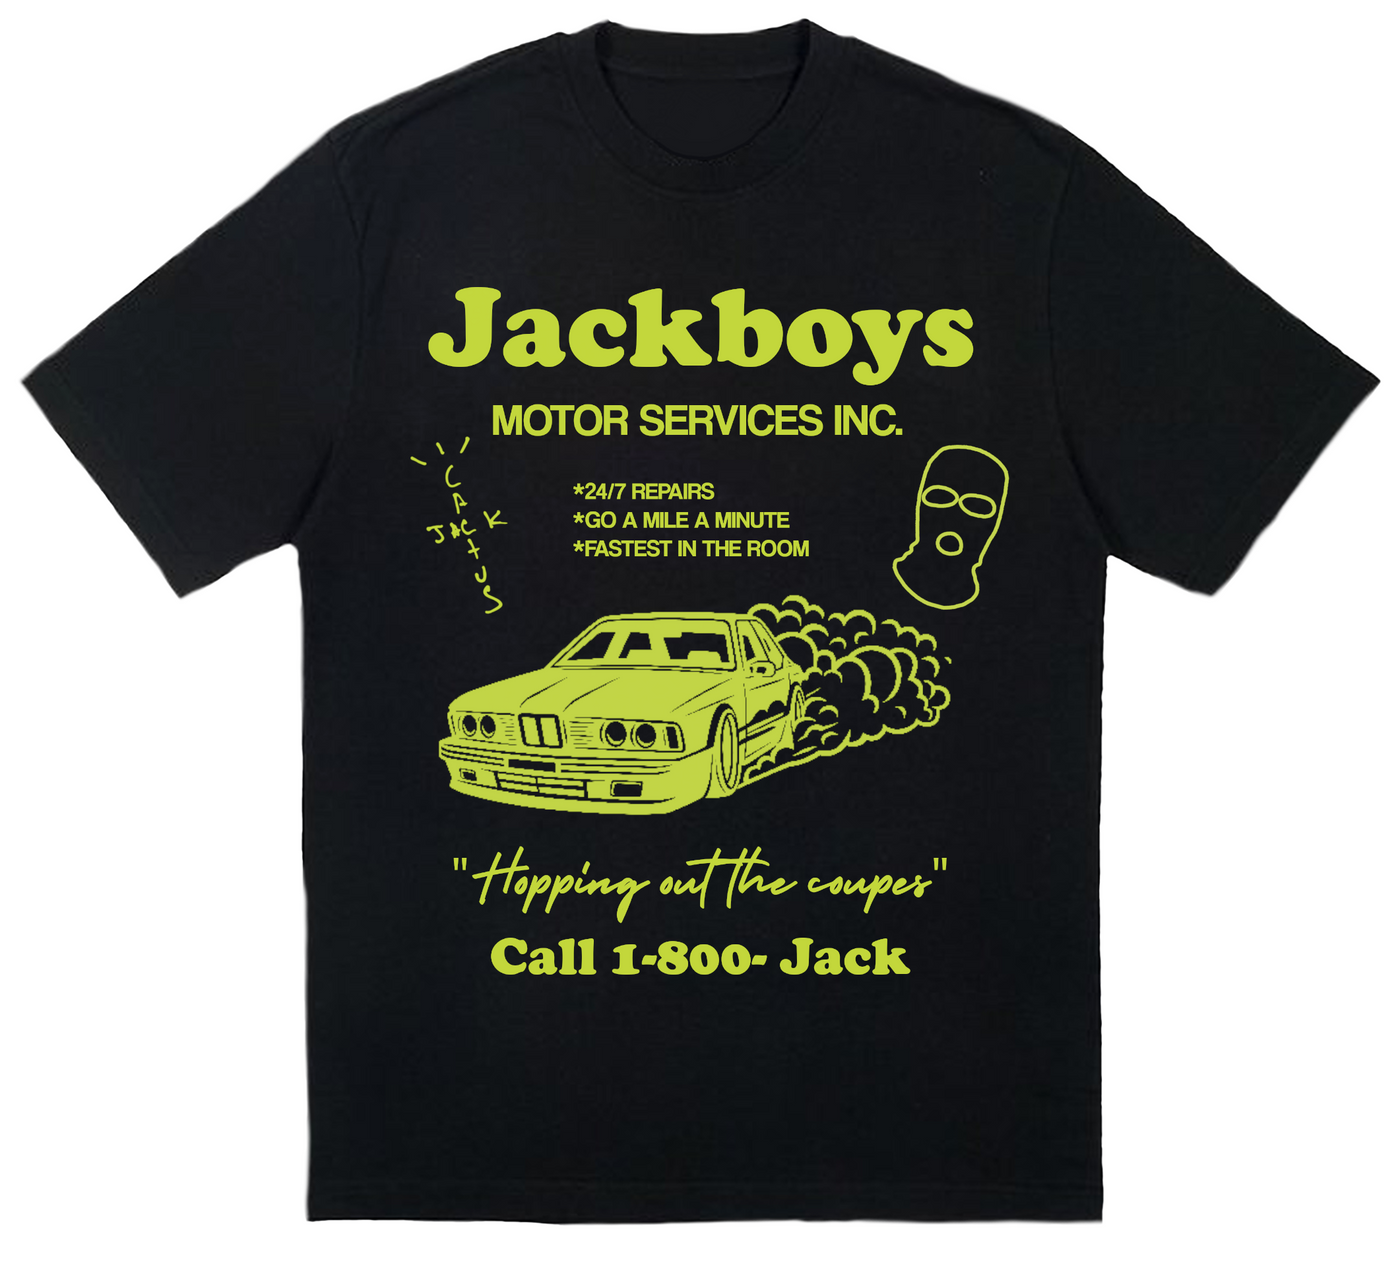 Jackboys Motor Services T-shirt